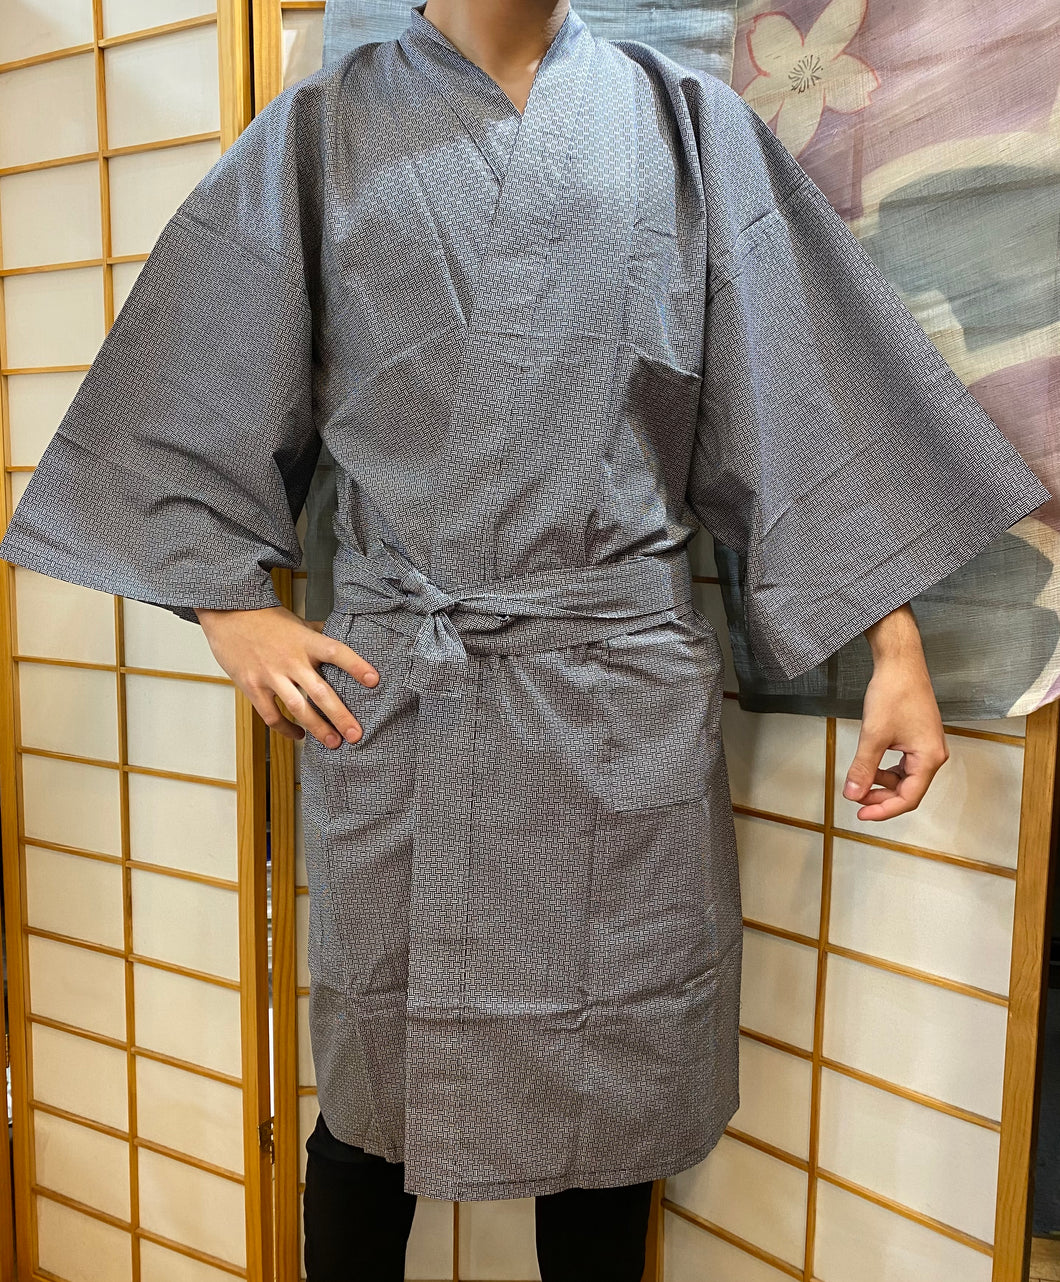 Kimono Robe - short woven pattern blue/white